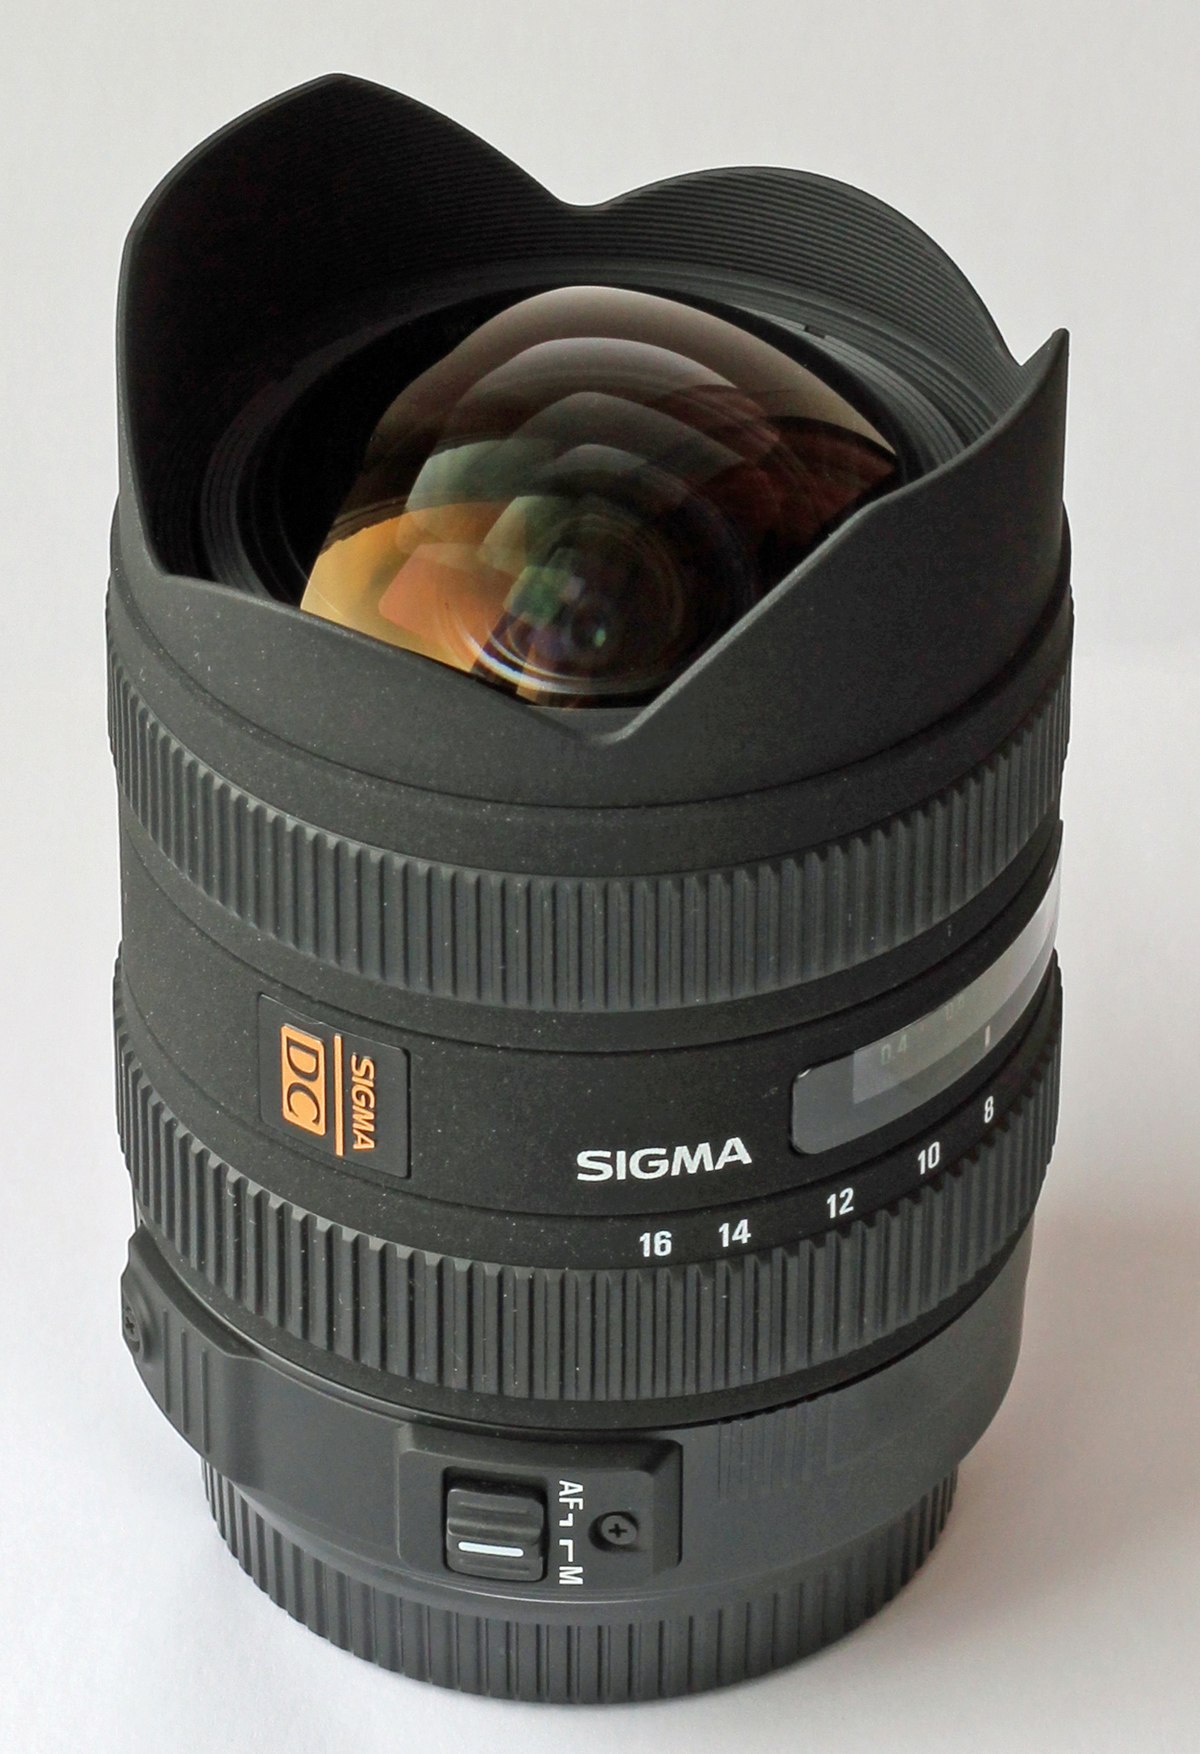 Sigma 8-16mm f/4.5-5.6 DC HSM lens - Wikipedia